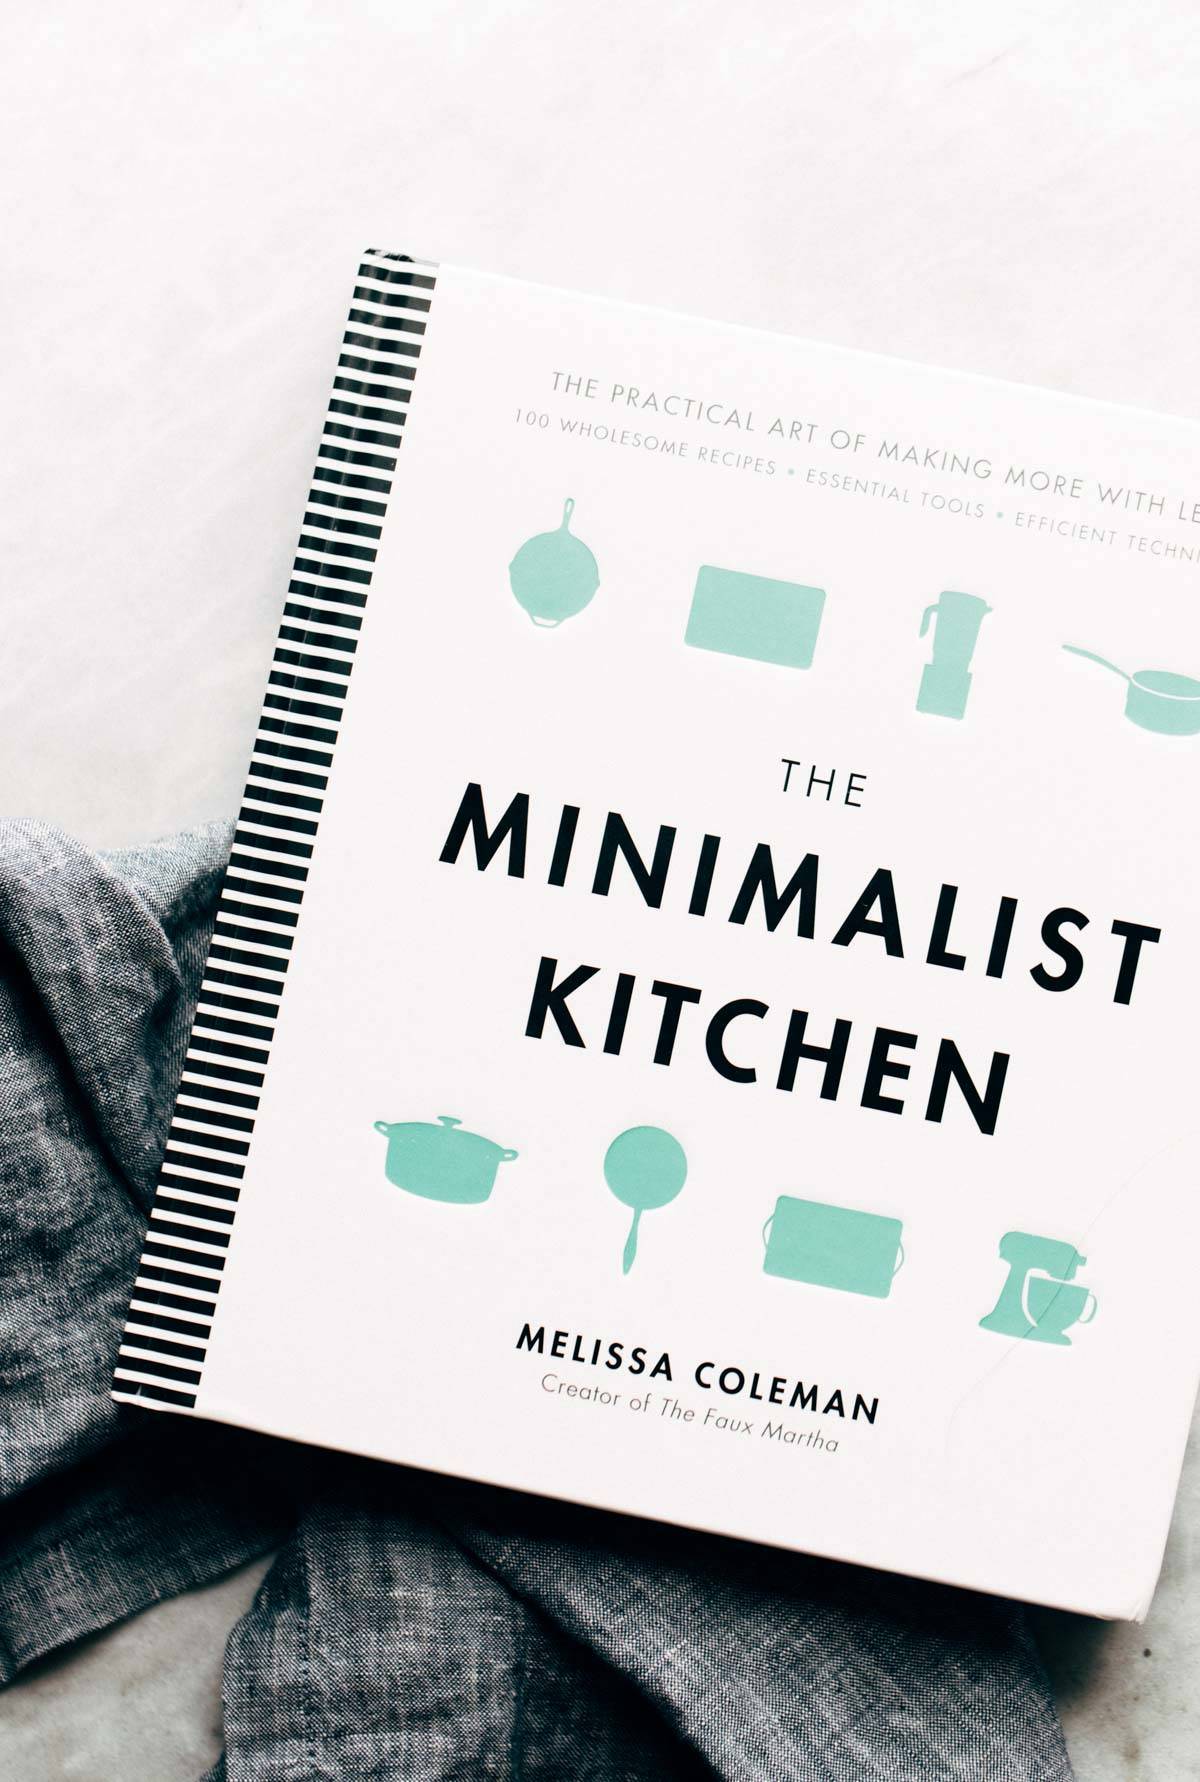 A book titled "The Minimalist Kitchen".